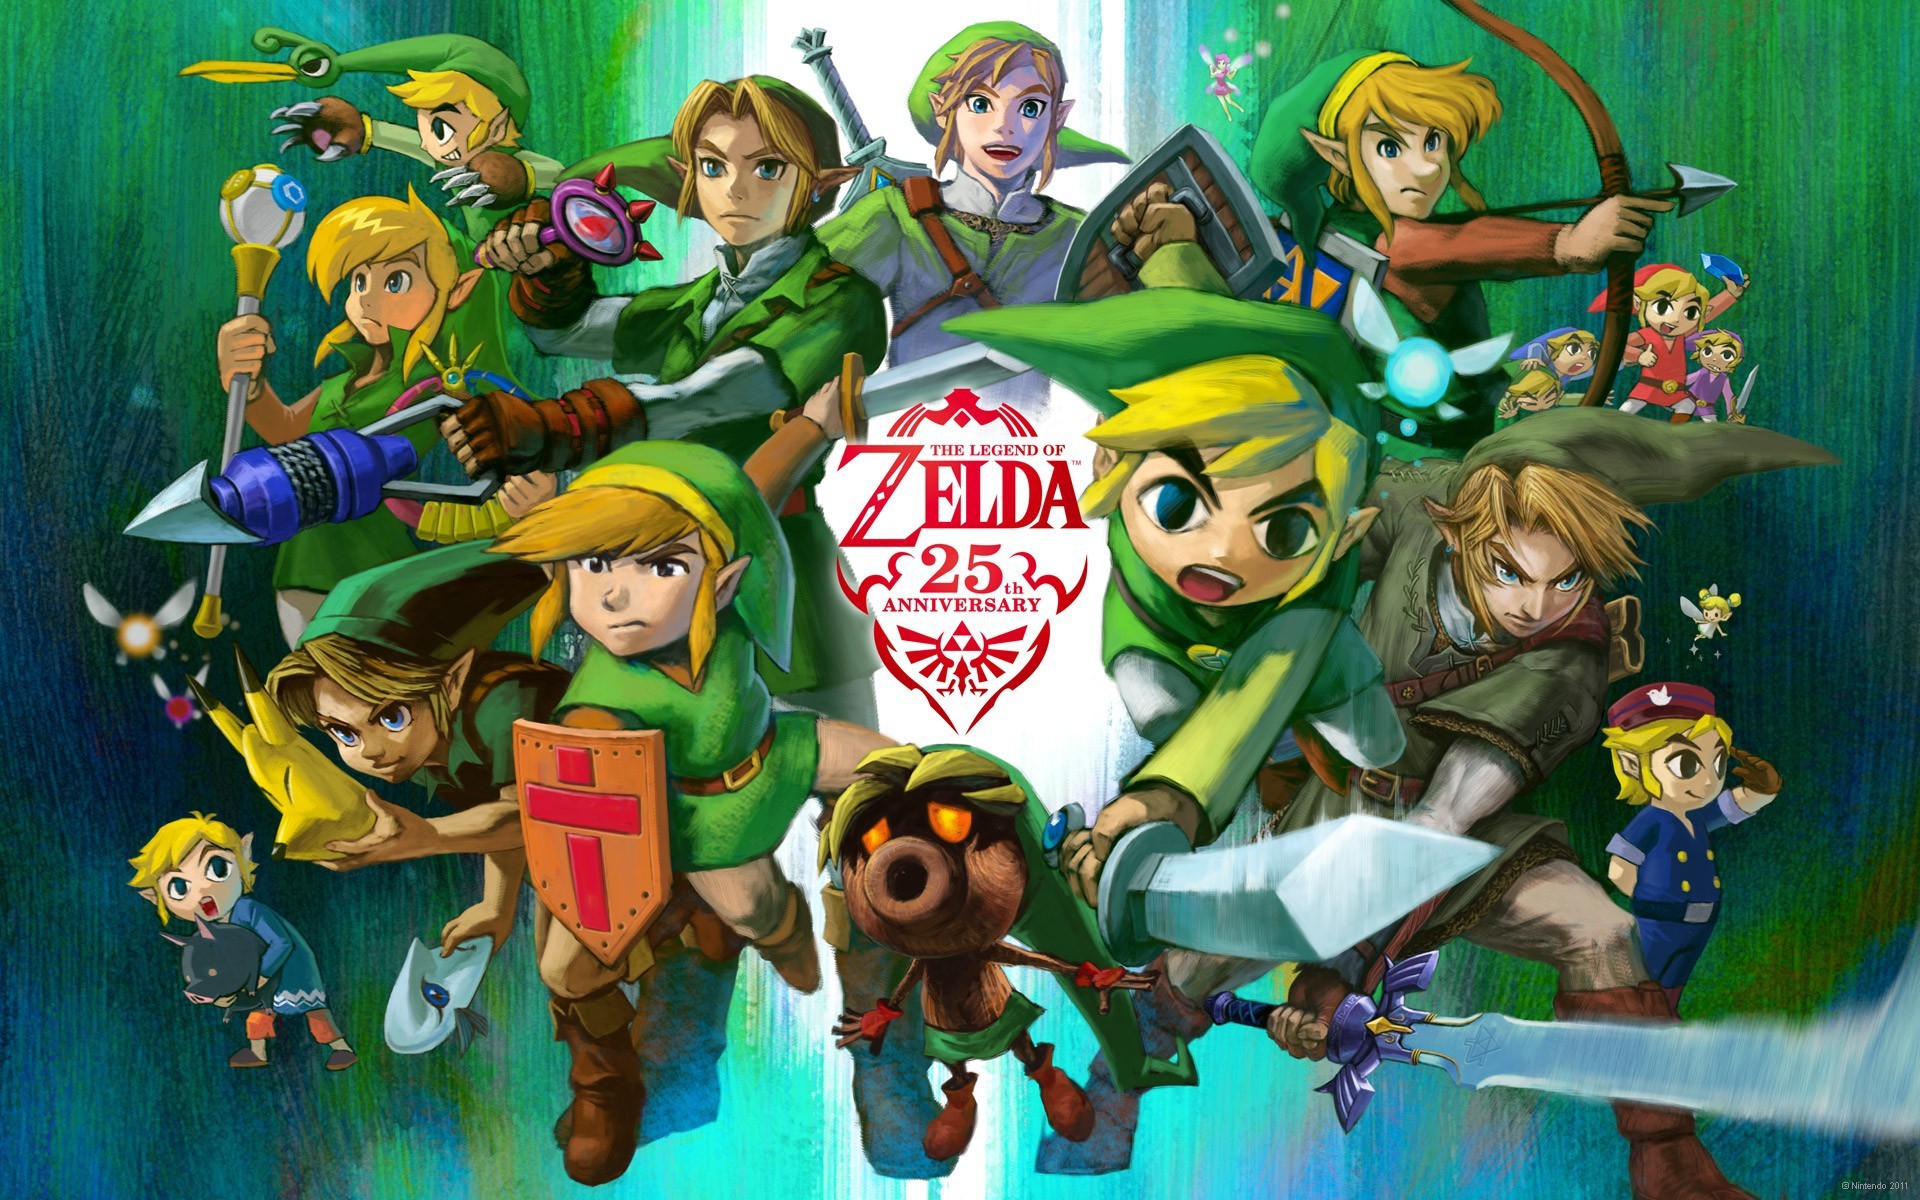 Nintendo link. The Legend of Zelda (игра). Легенда о Зельде Нинтендо.